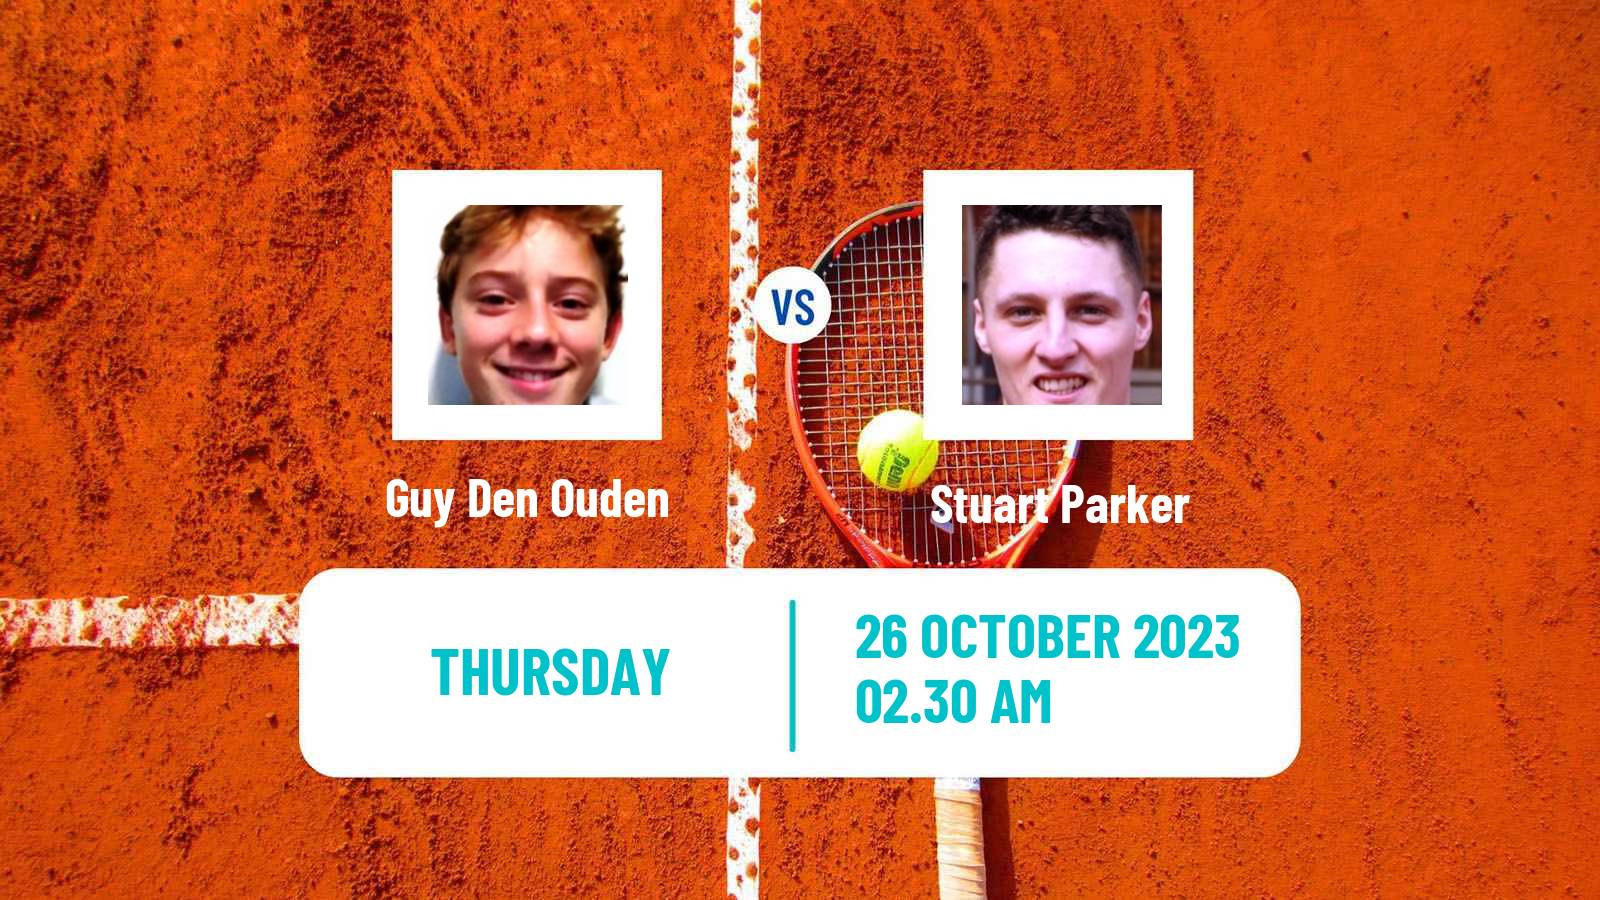 Tennis ITF M15 Heraklion 4 Men Guy Den Ouden - Stuart Parker